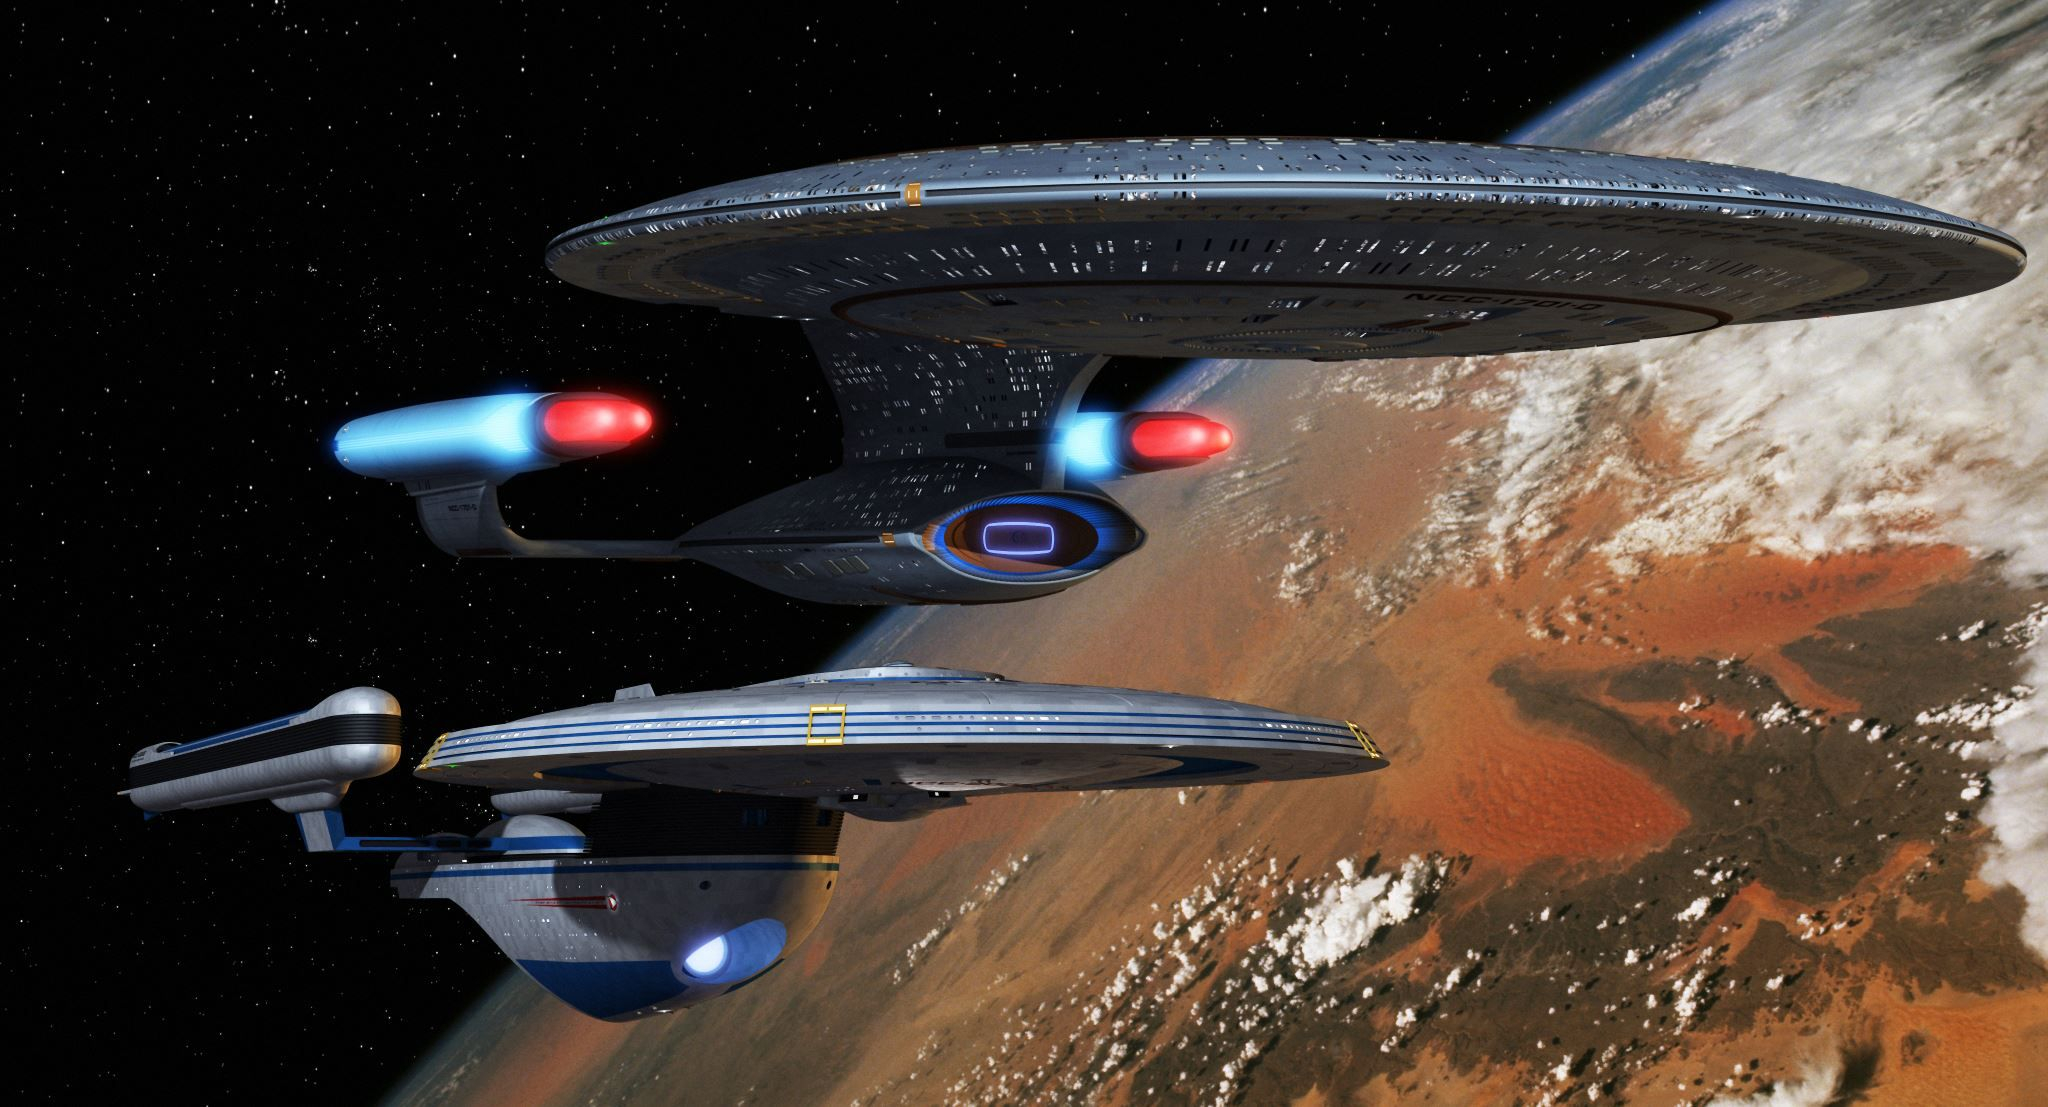 2048x1107 Pin by Mike Winham on Star Trek The Next Generation | Star trek, Star trek starships, Star trek images